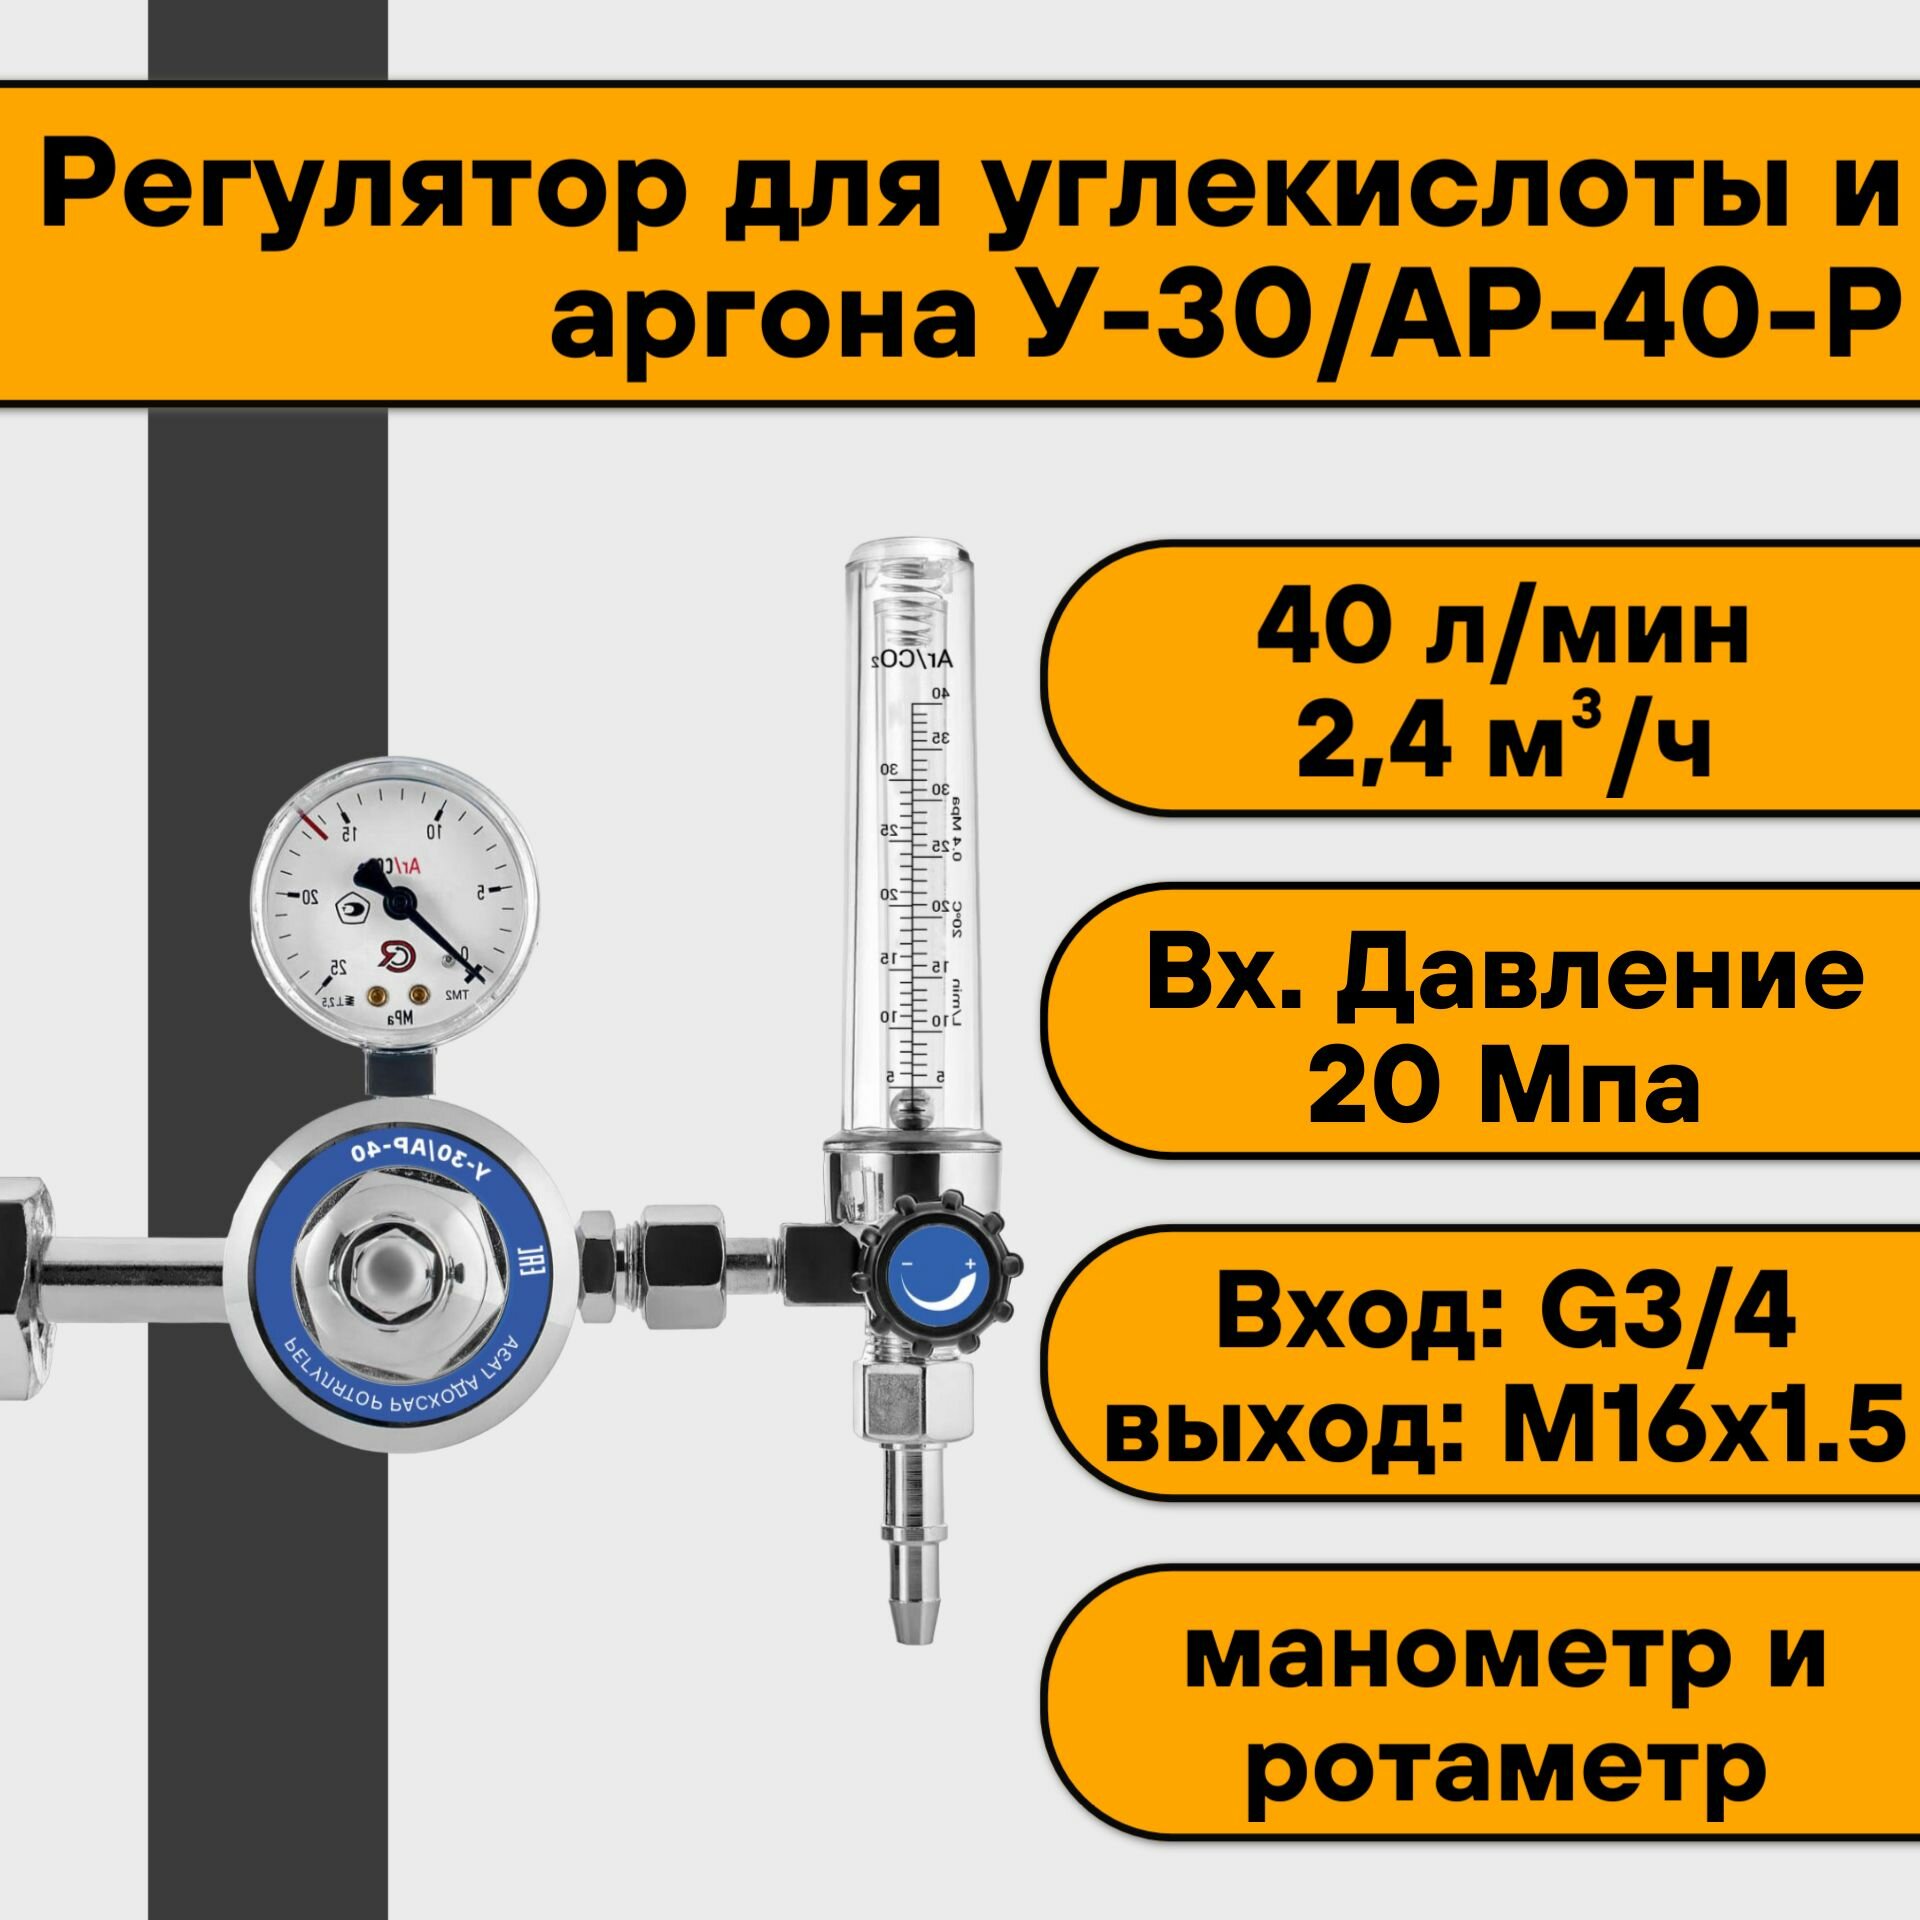 Регулятор для углекислоты и аргона У-30/АР-40-Р (манометр+ротаметр)